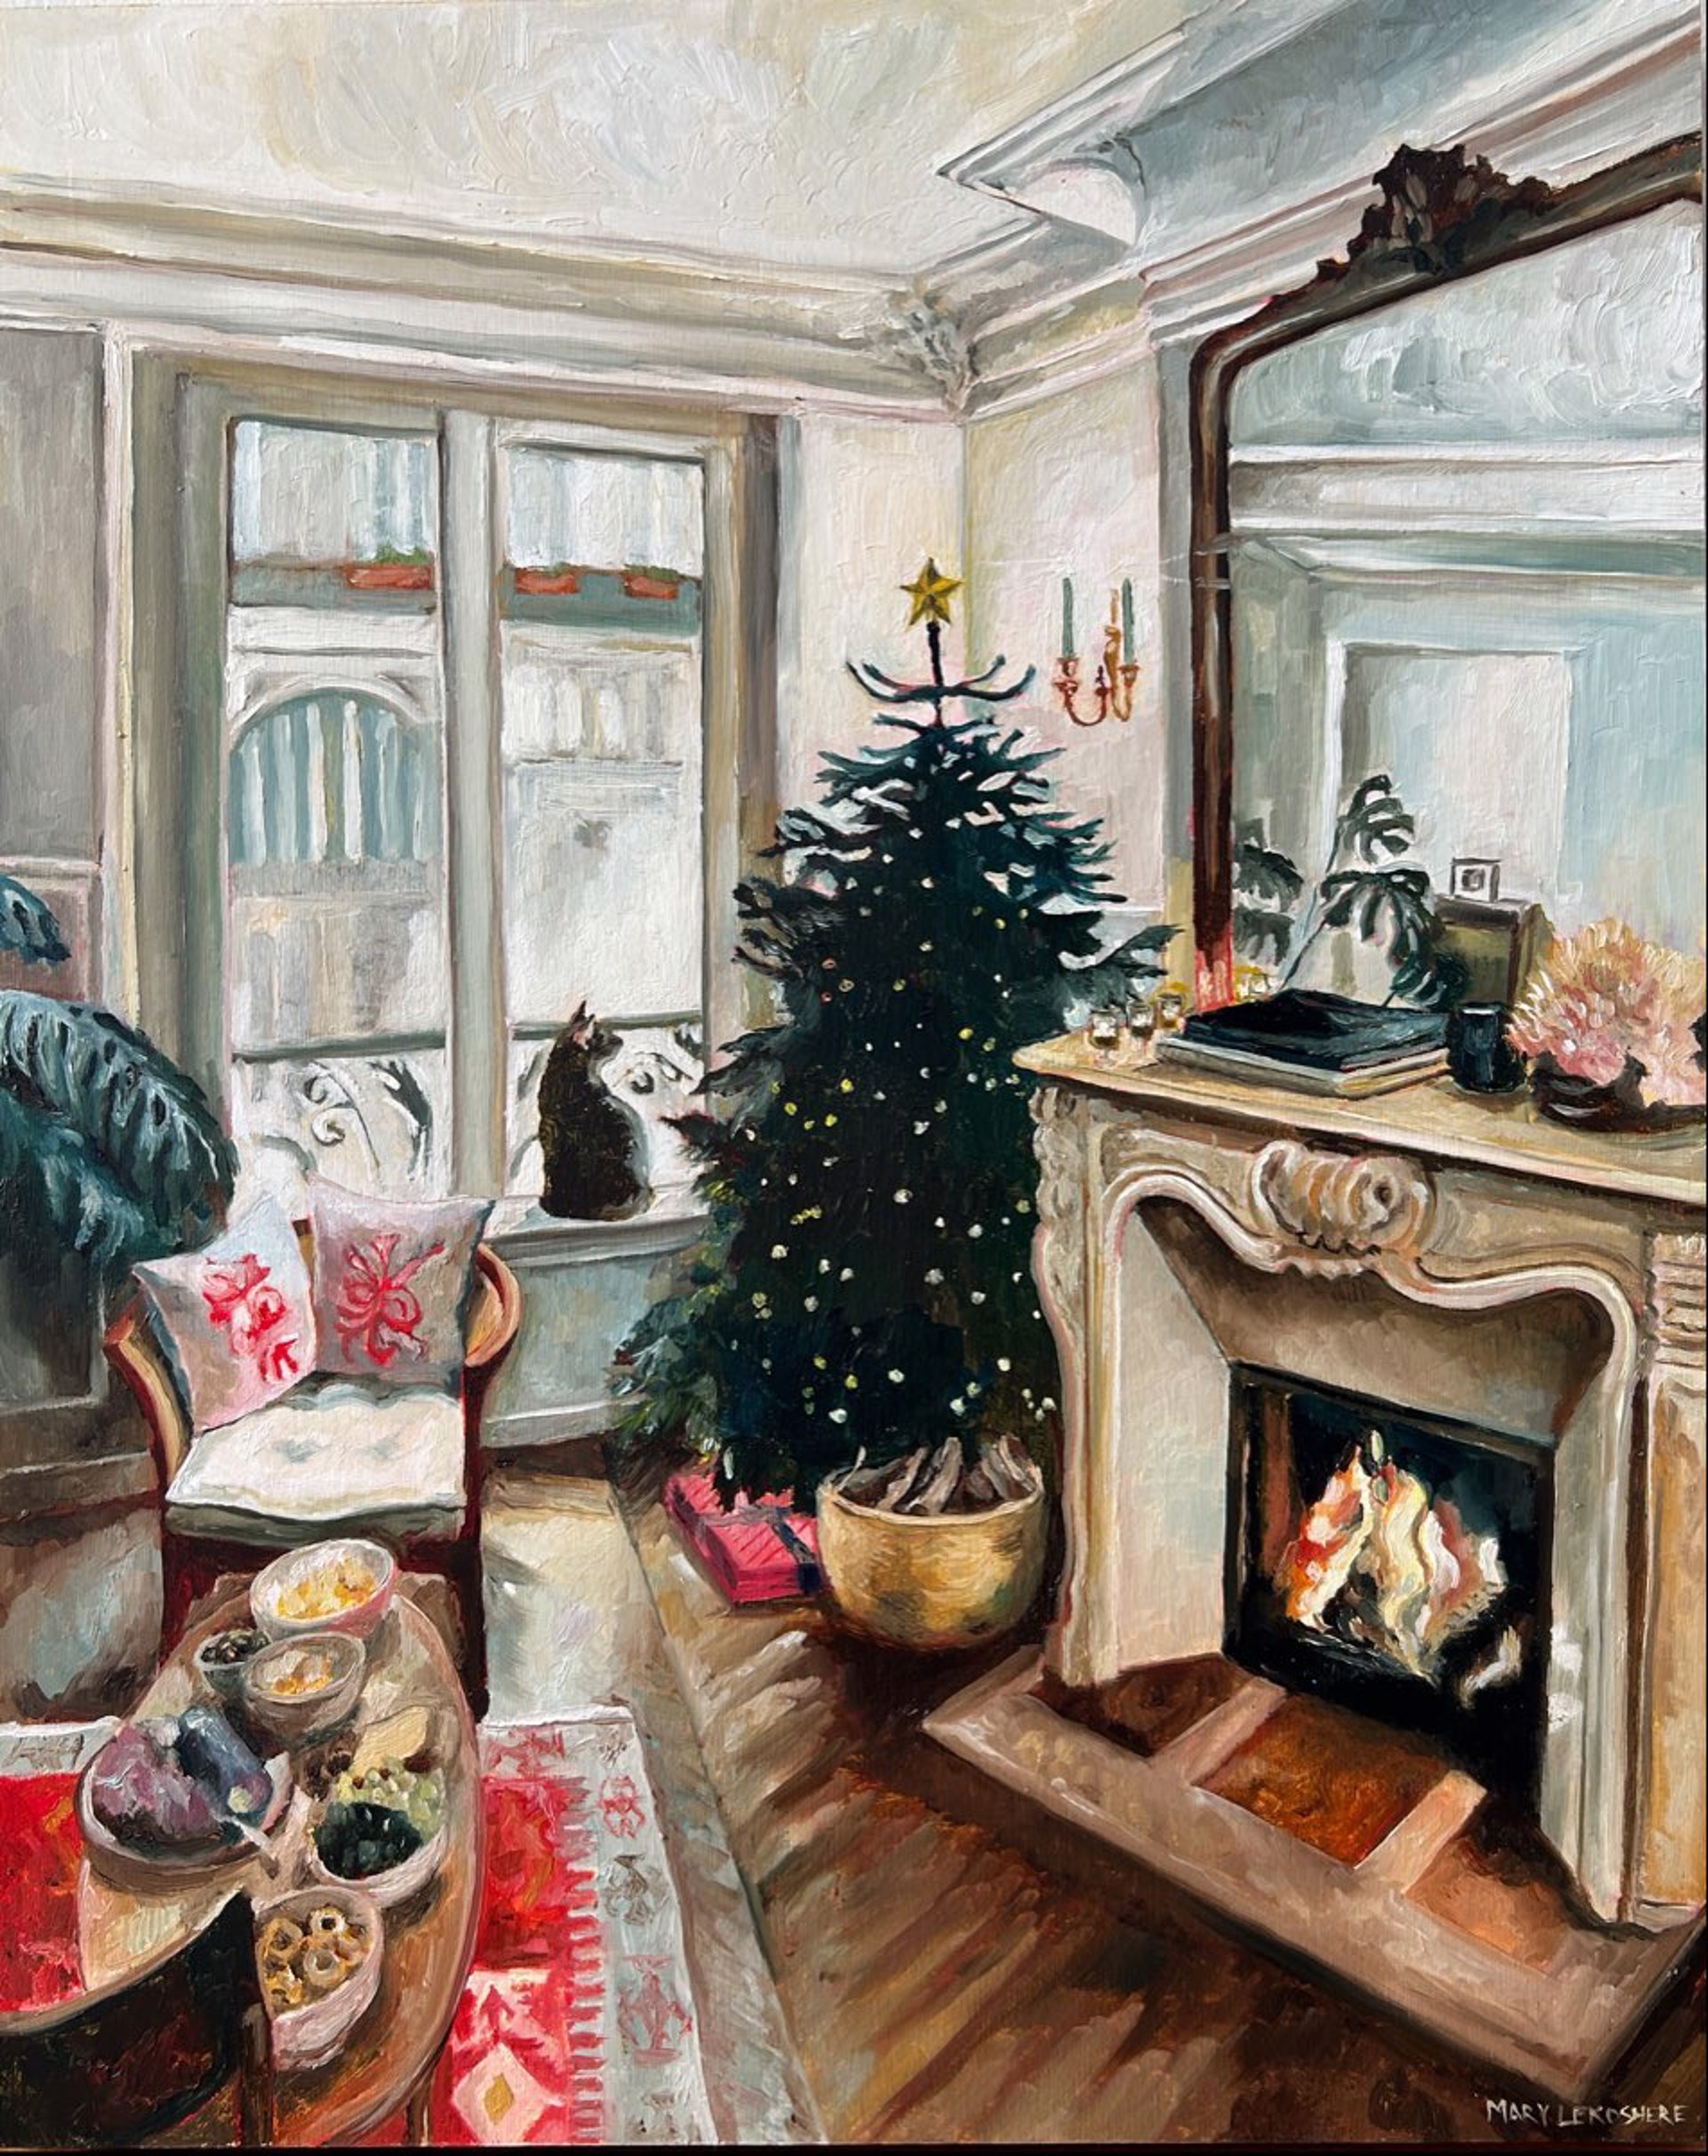 Noël by Mary Lekoshere